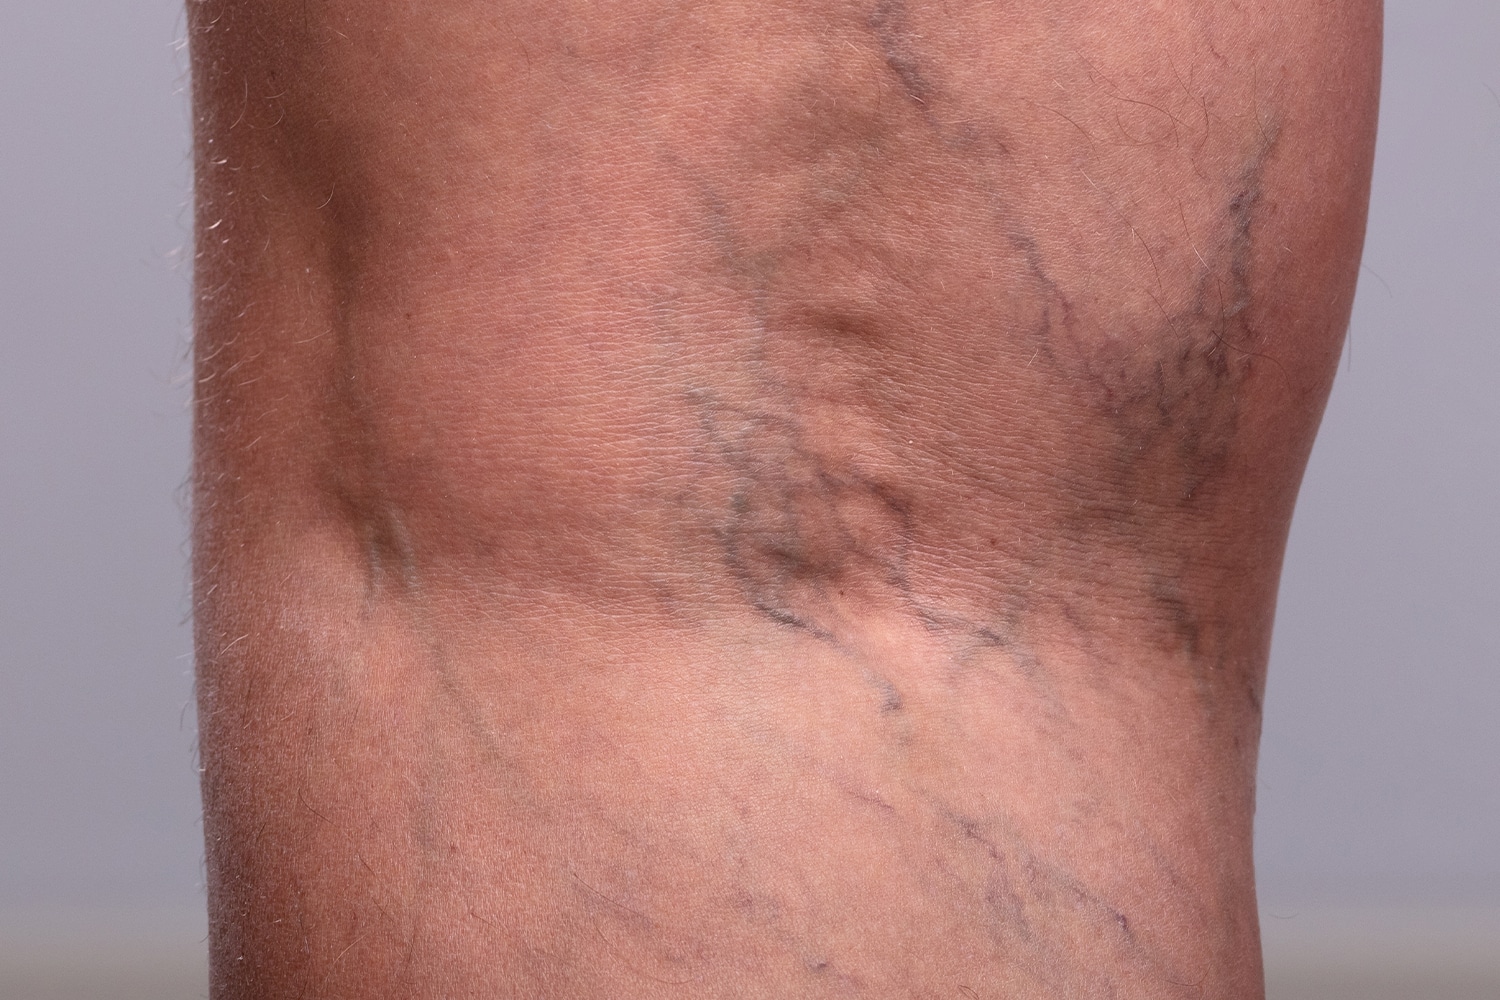 Man's back calf showing varicose veins before laser vein treatment